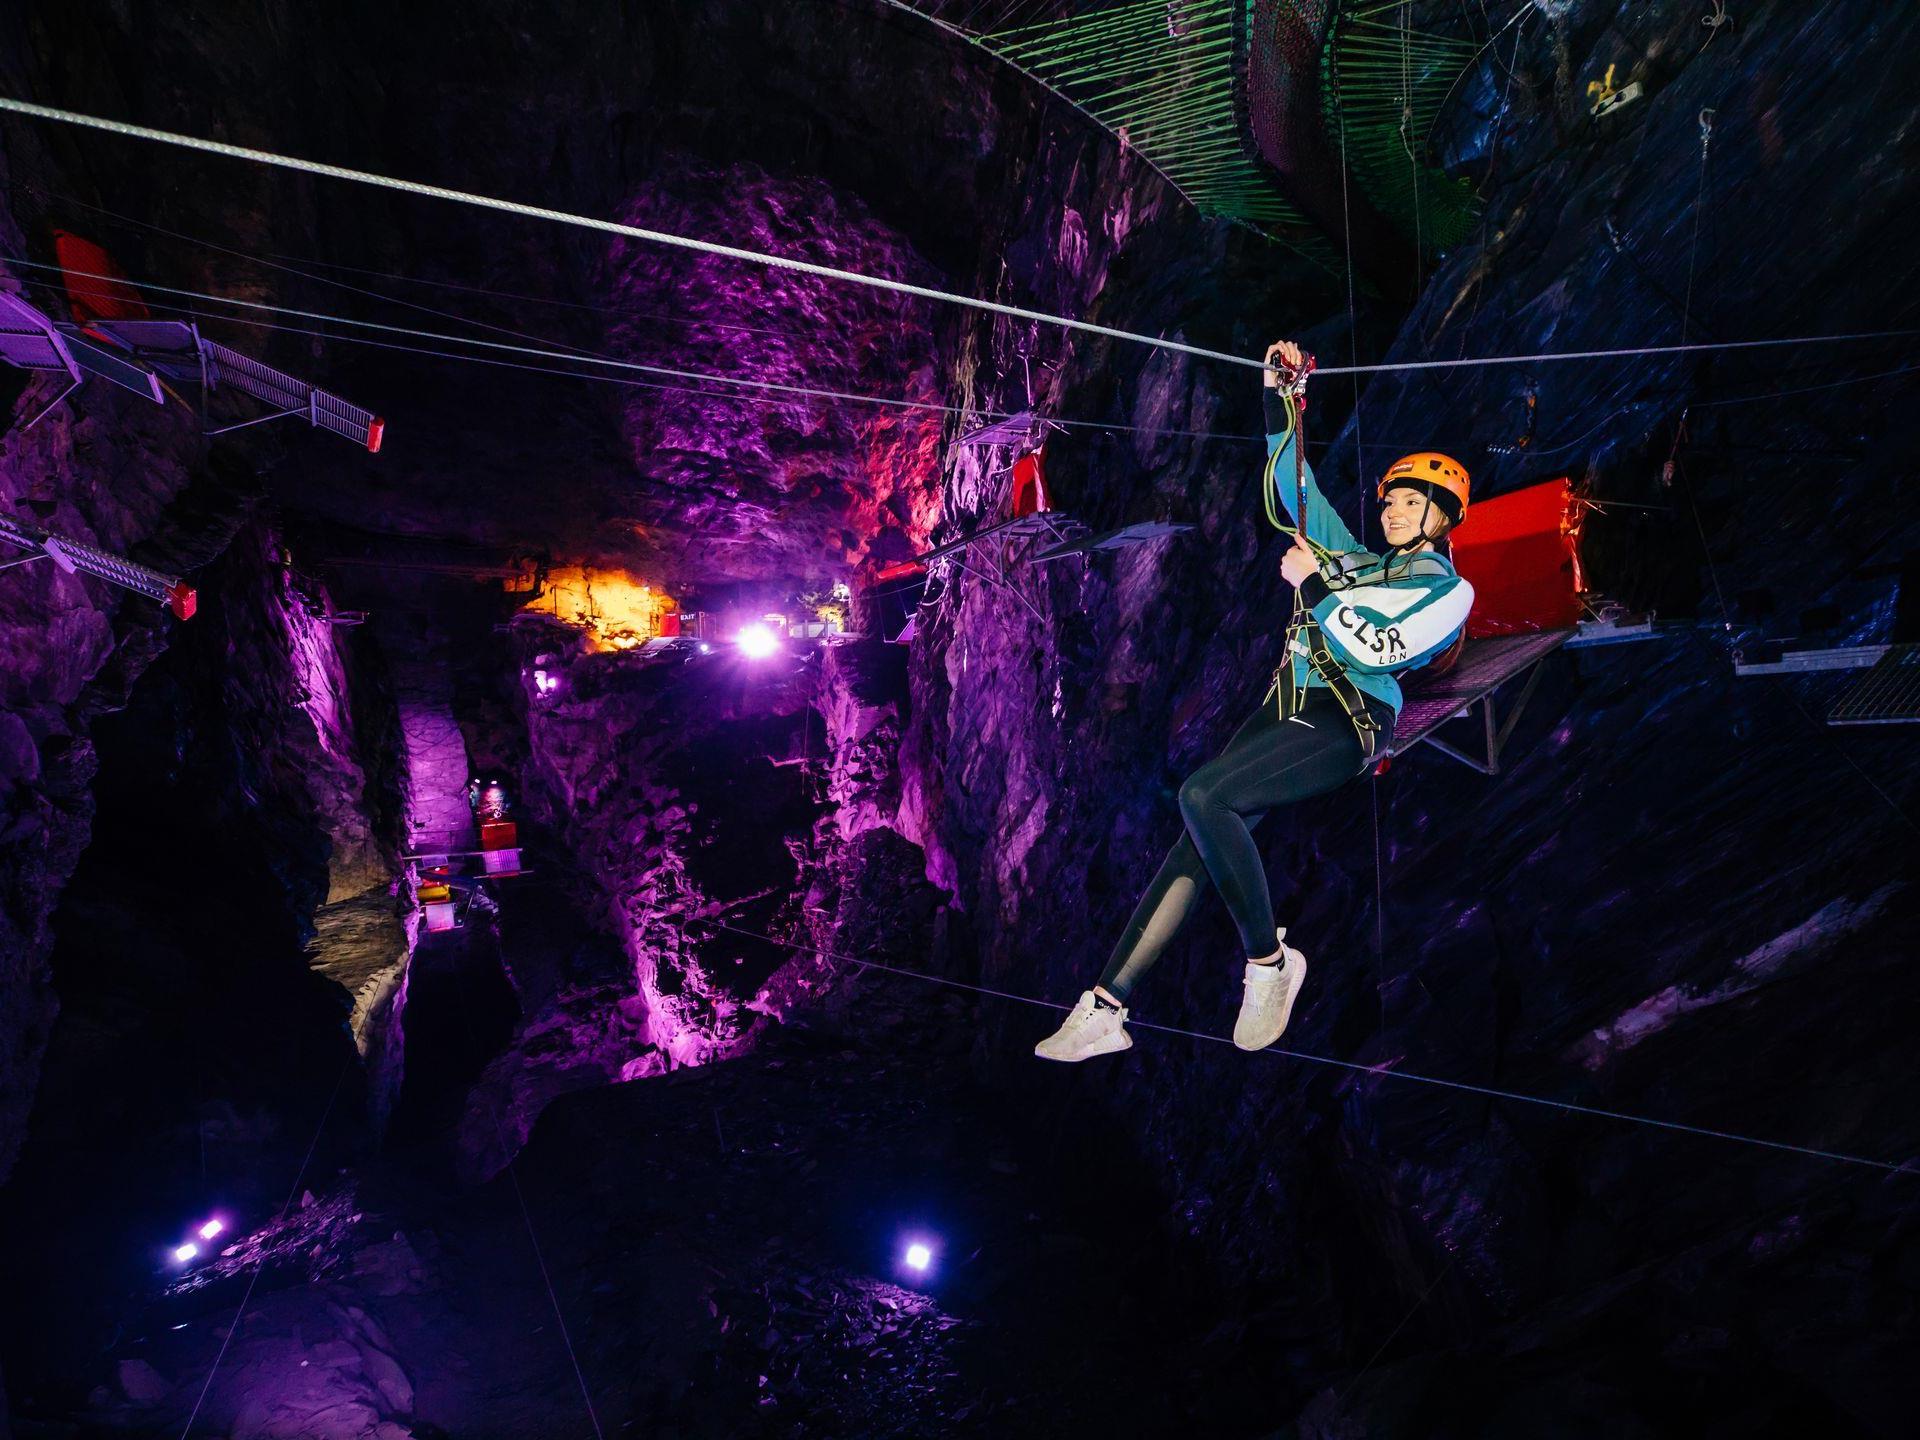 Take flight on 11 zip lines at Zip World Caverns